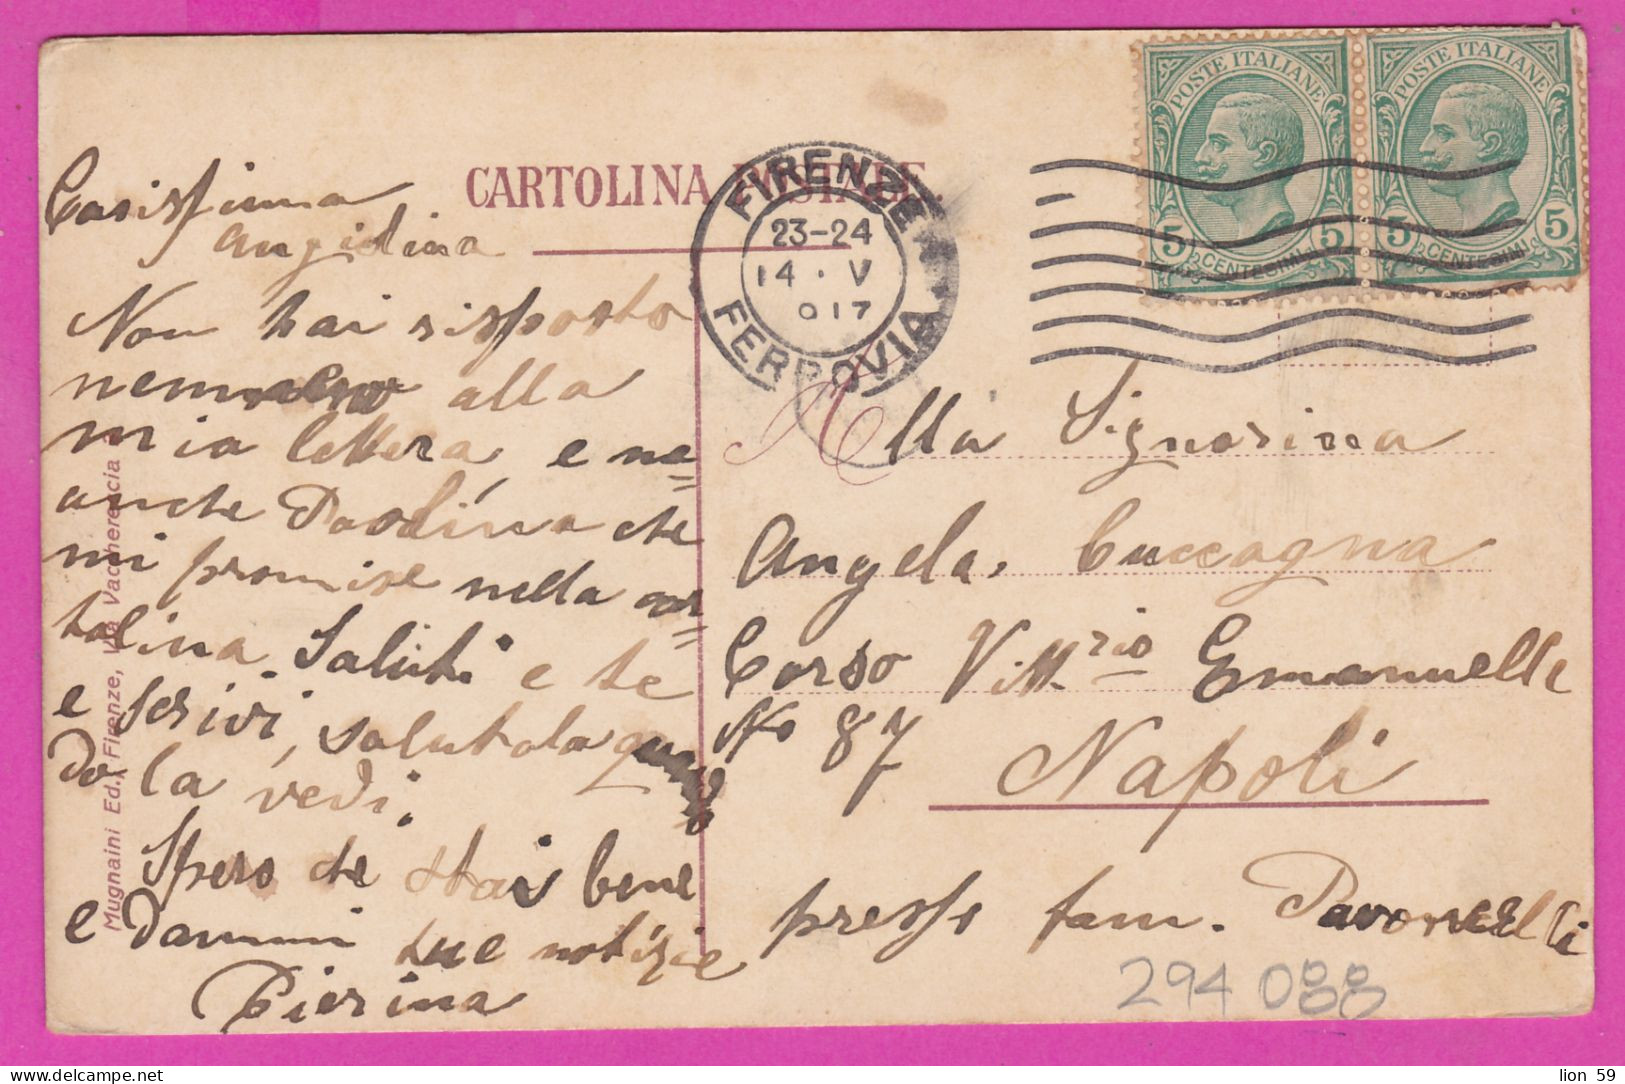 294088 / Italy - FIRENZE - Palazzo Vecchio PC 1917  USED 5+5 Cent. Victor Emmanuel III , Italia Italie - Marcophilie